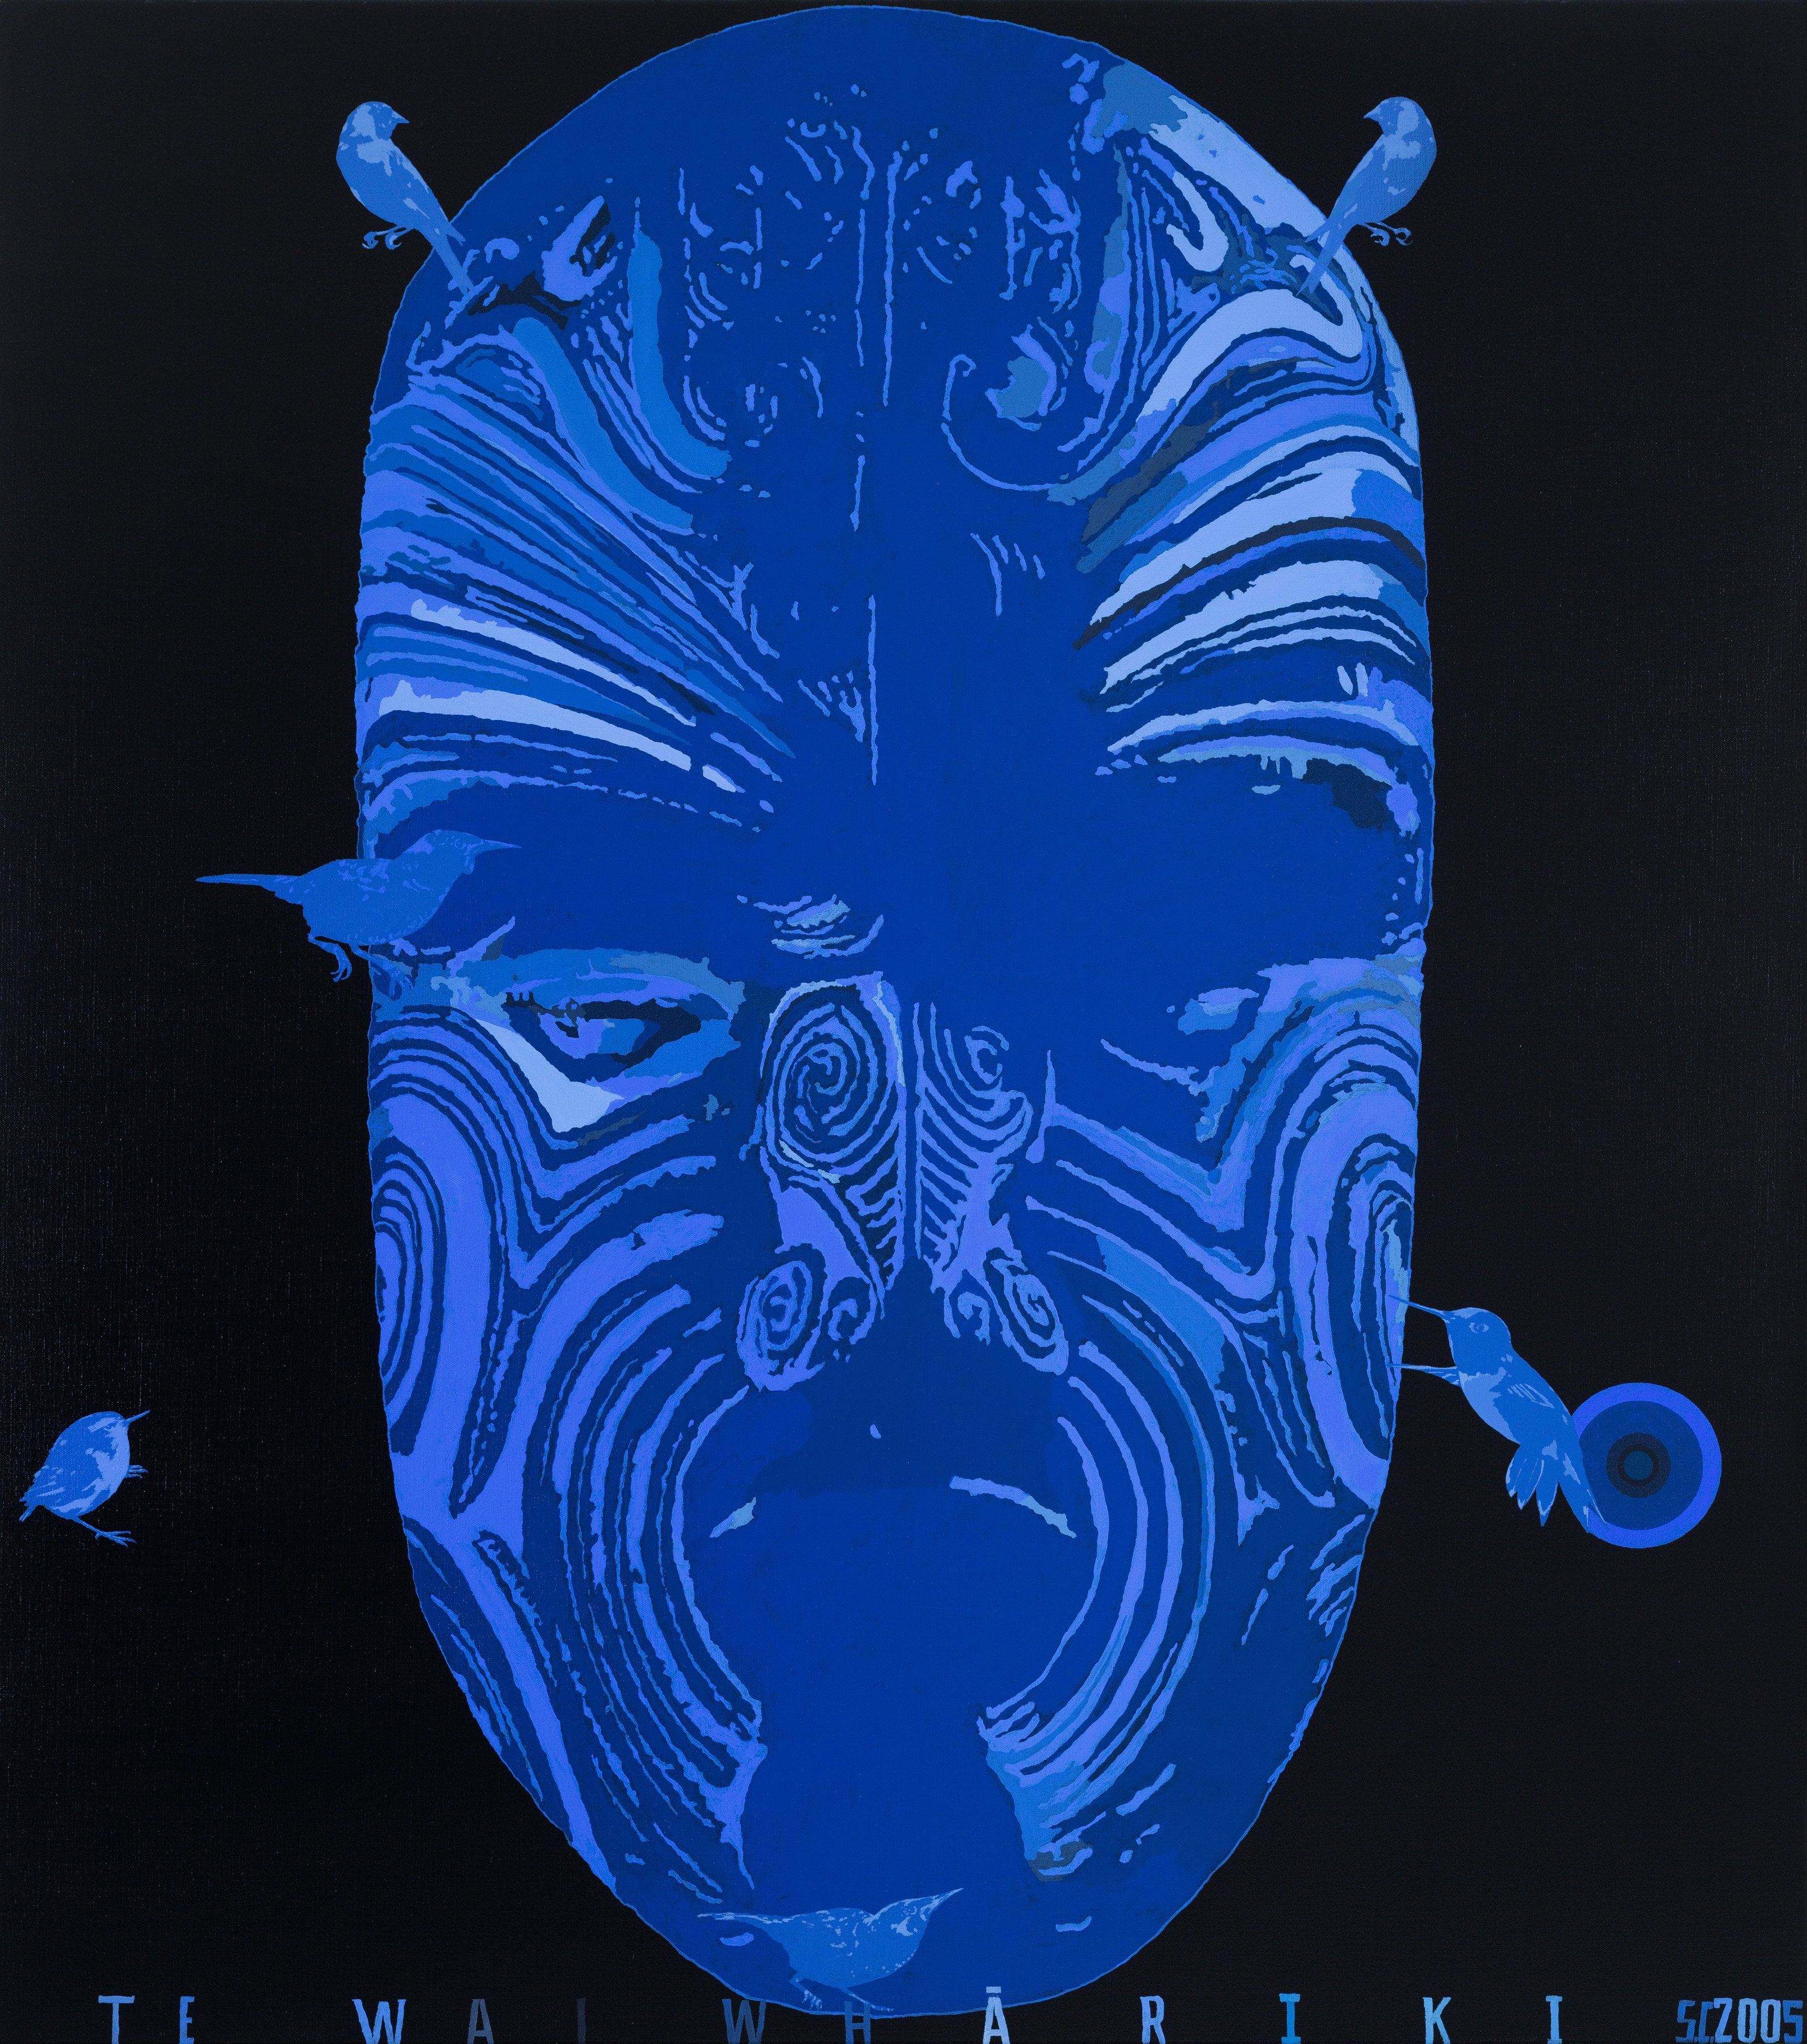 <p><strong>Shane Cotton</strong>&nbsp;<em>Te Waiwhariki</em>, 2004, Auckland Art Gallery Toi o Tāmaki, gift of the Patrons of the Auckland Art Gallery, 2005.</p>
